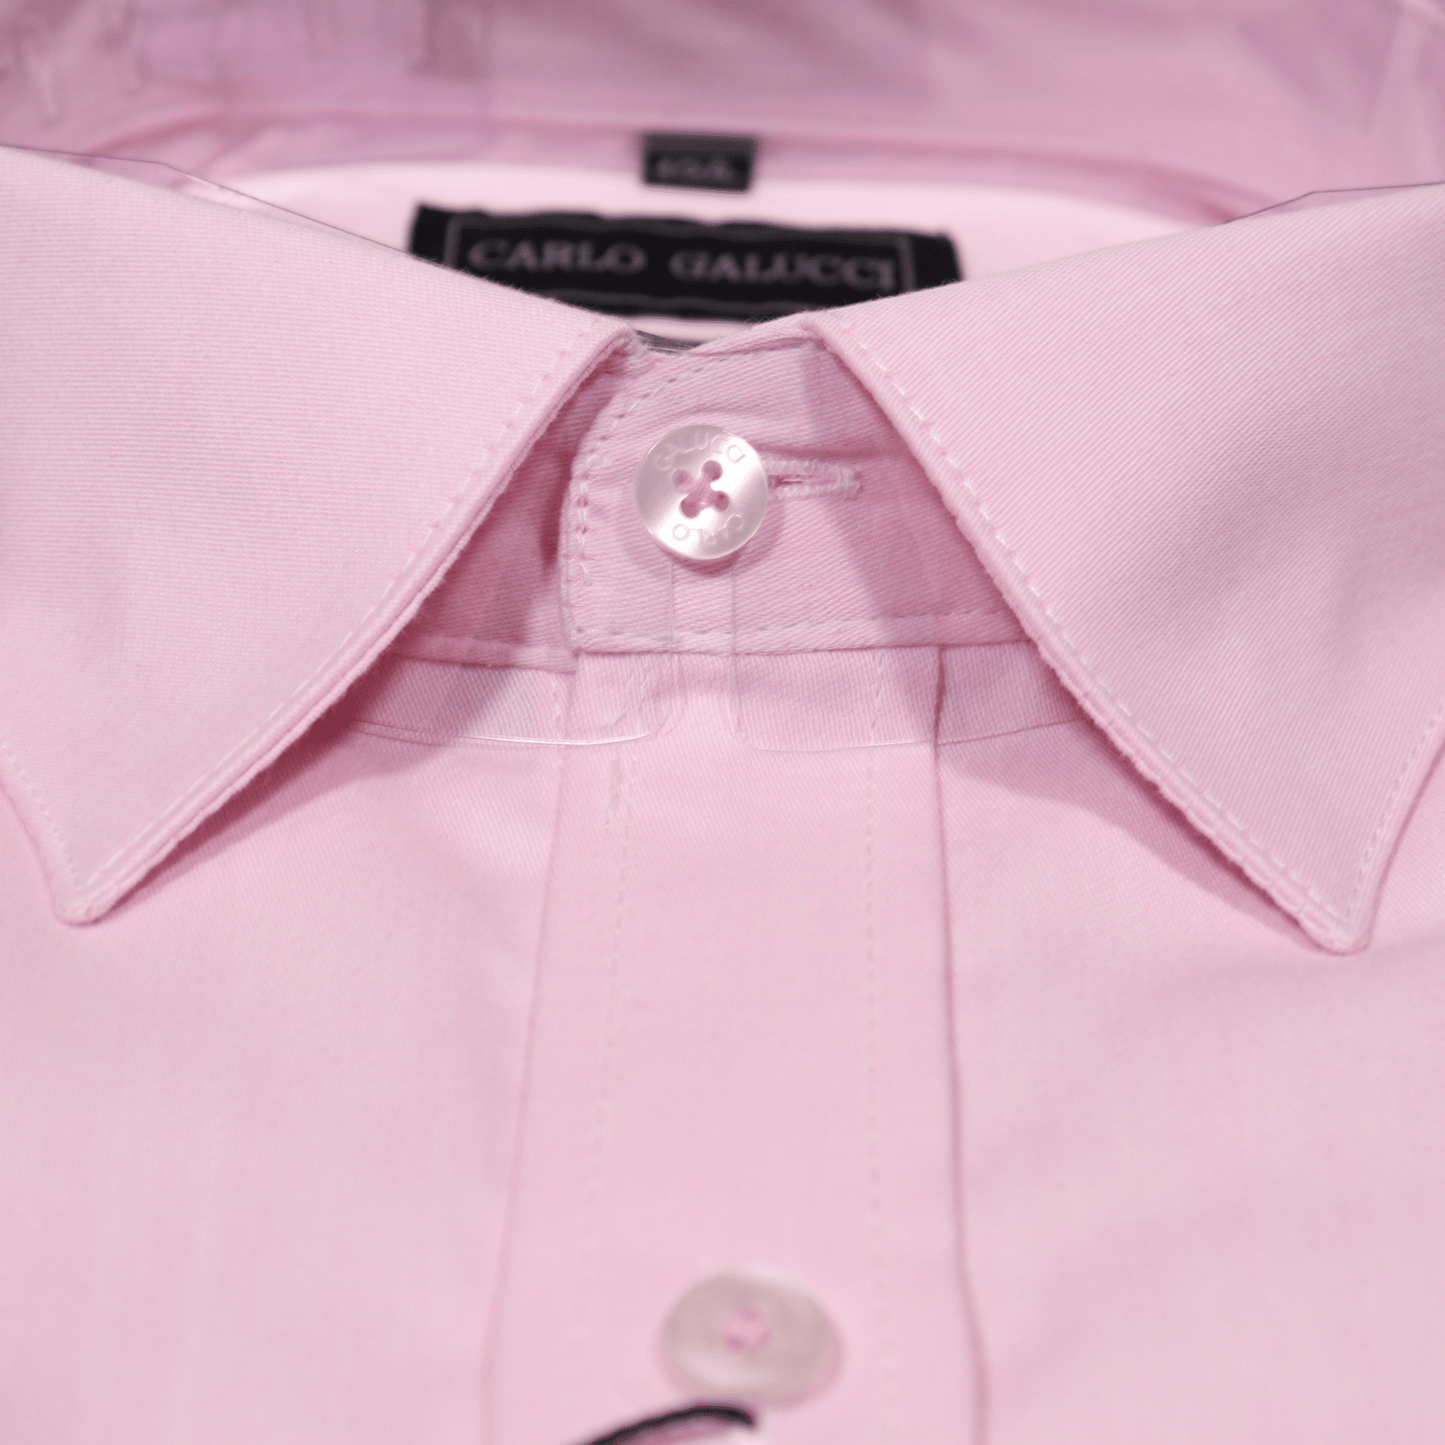 Carlo Galucci Long Sleeve Shirt - Pink